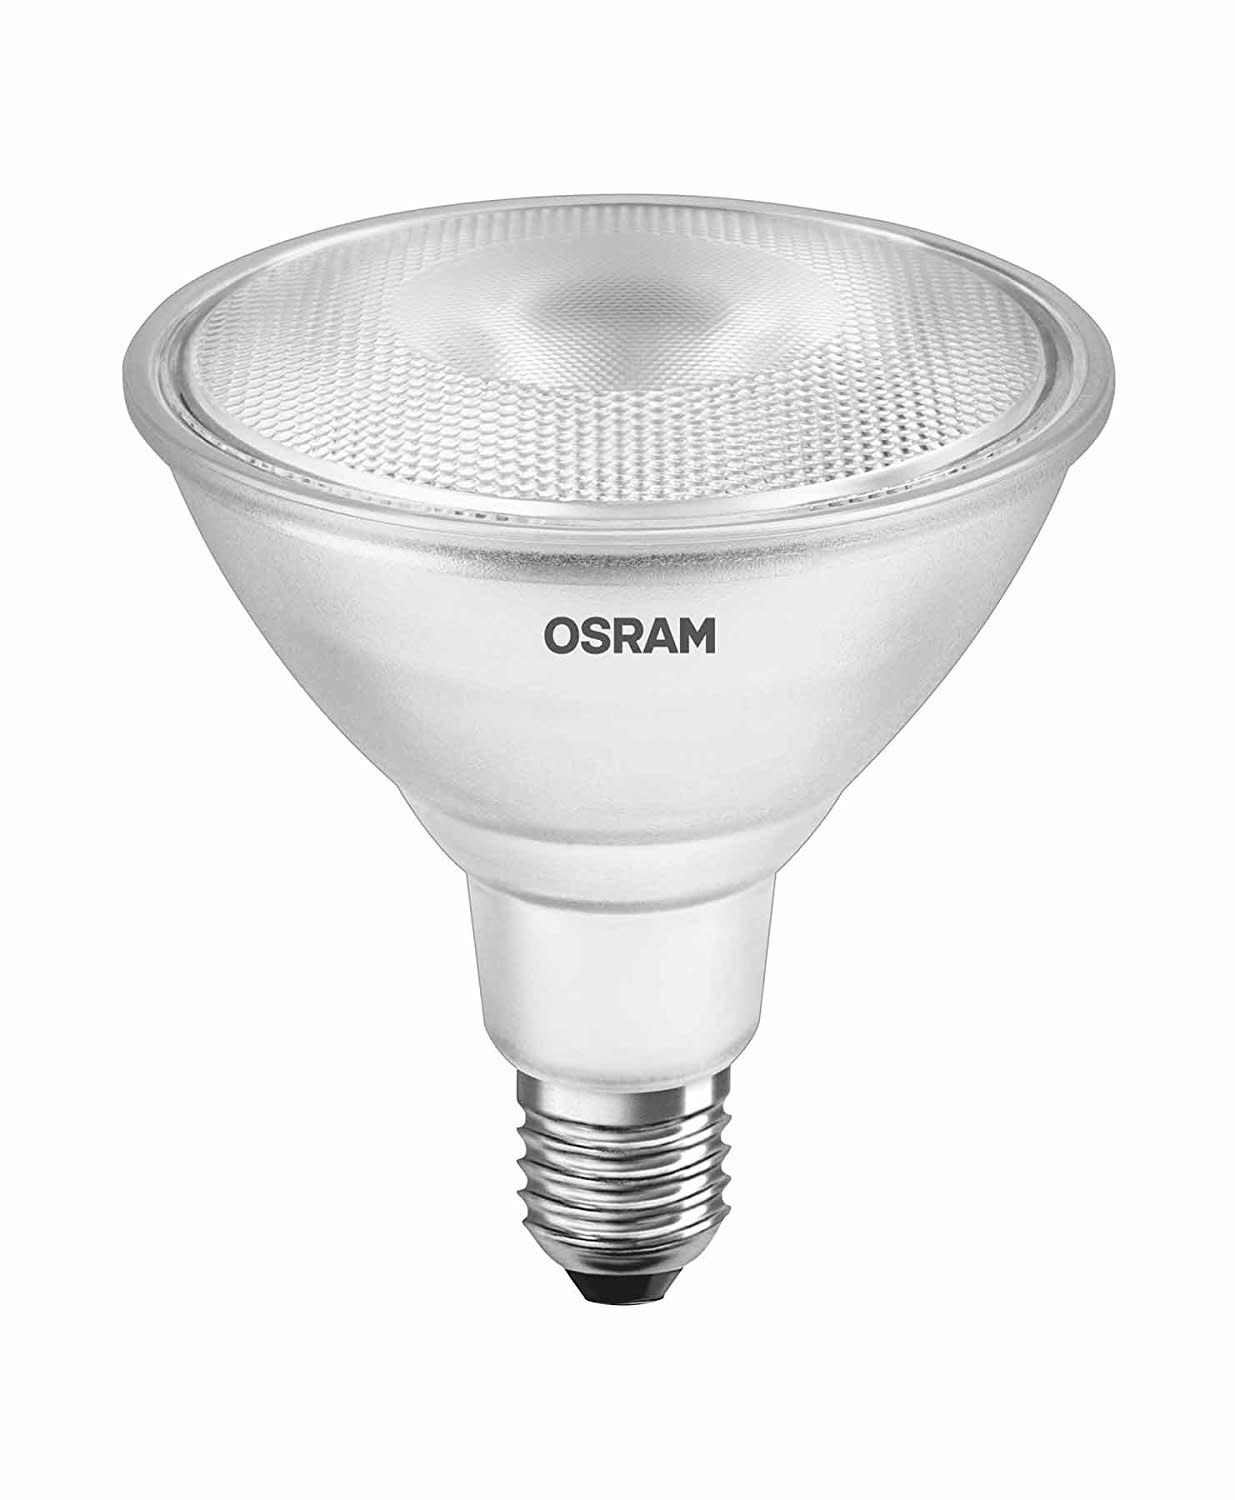 plakboek Reflectie Hoopvol Osram LED reflectorlamp 36° Parathom PAR30 8/75W E27 dim -  mijnOnderdelenhuis.nl